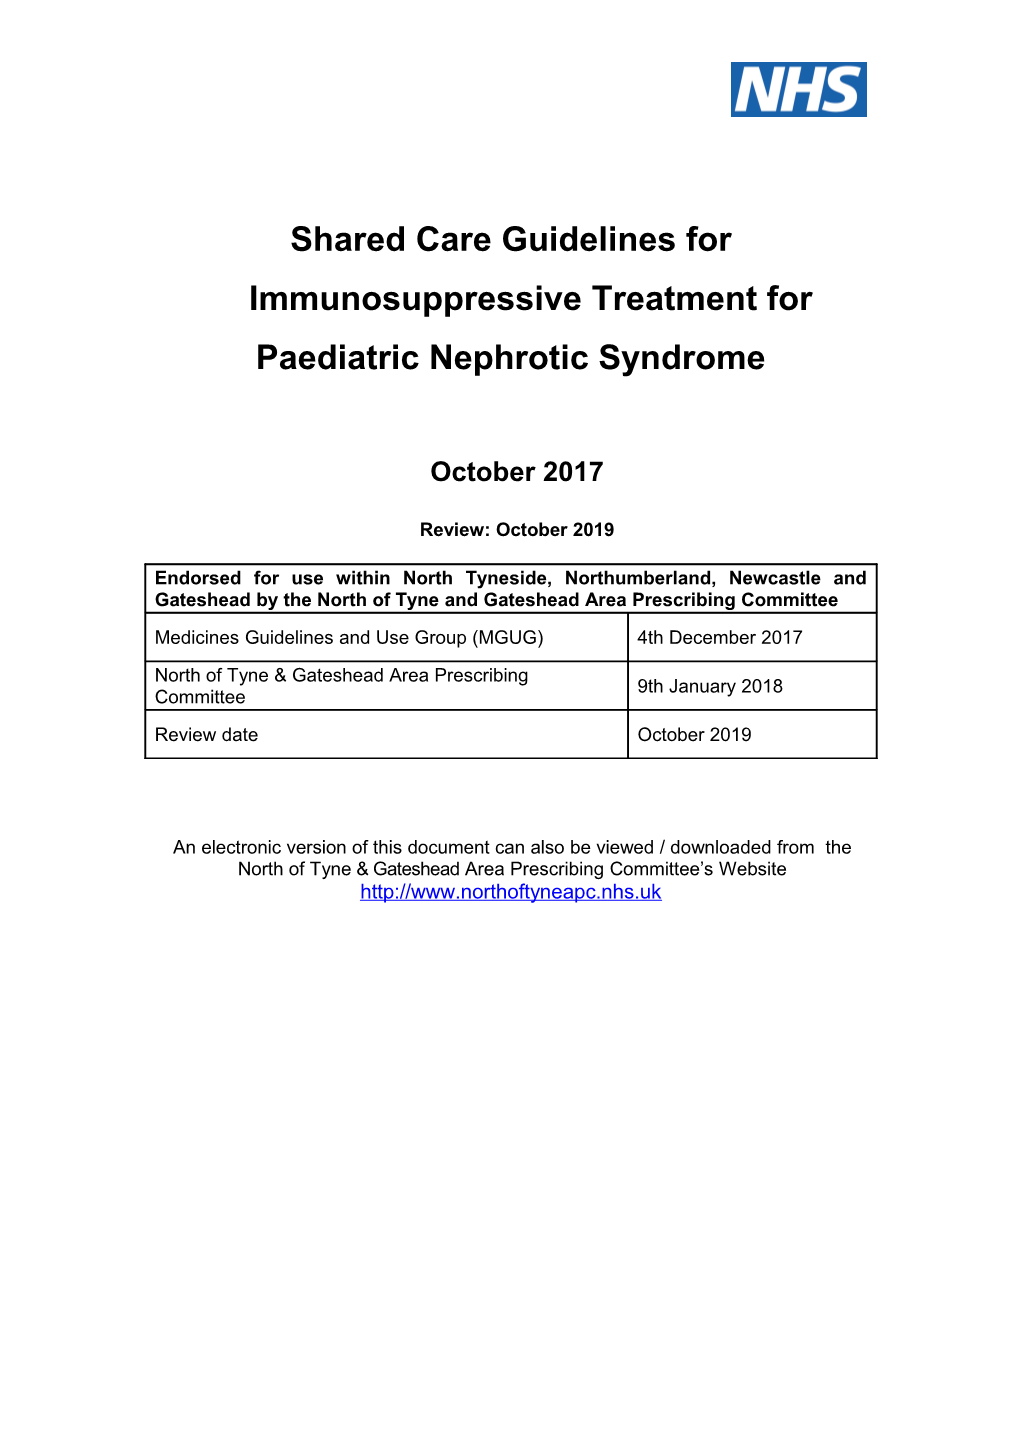 Shared Care Guidelines for Immunosuppressive Treatment For